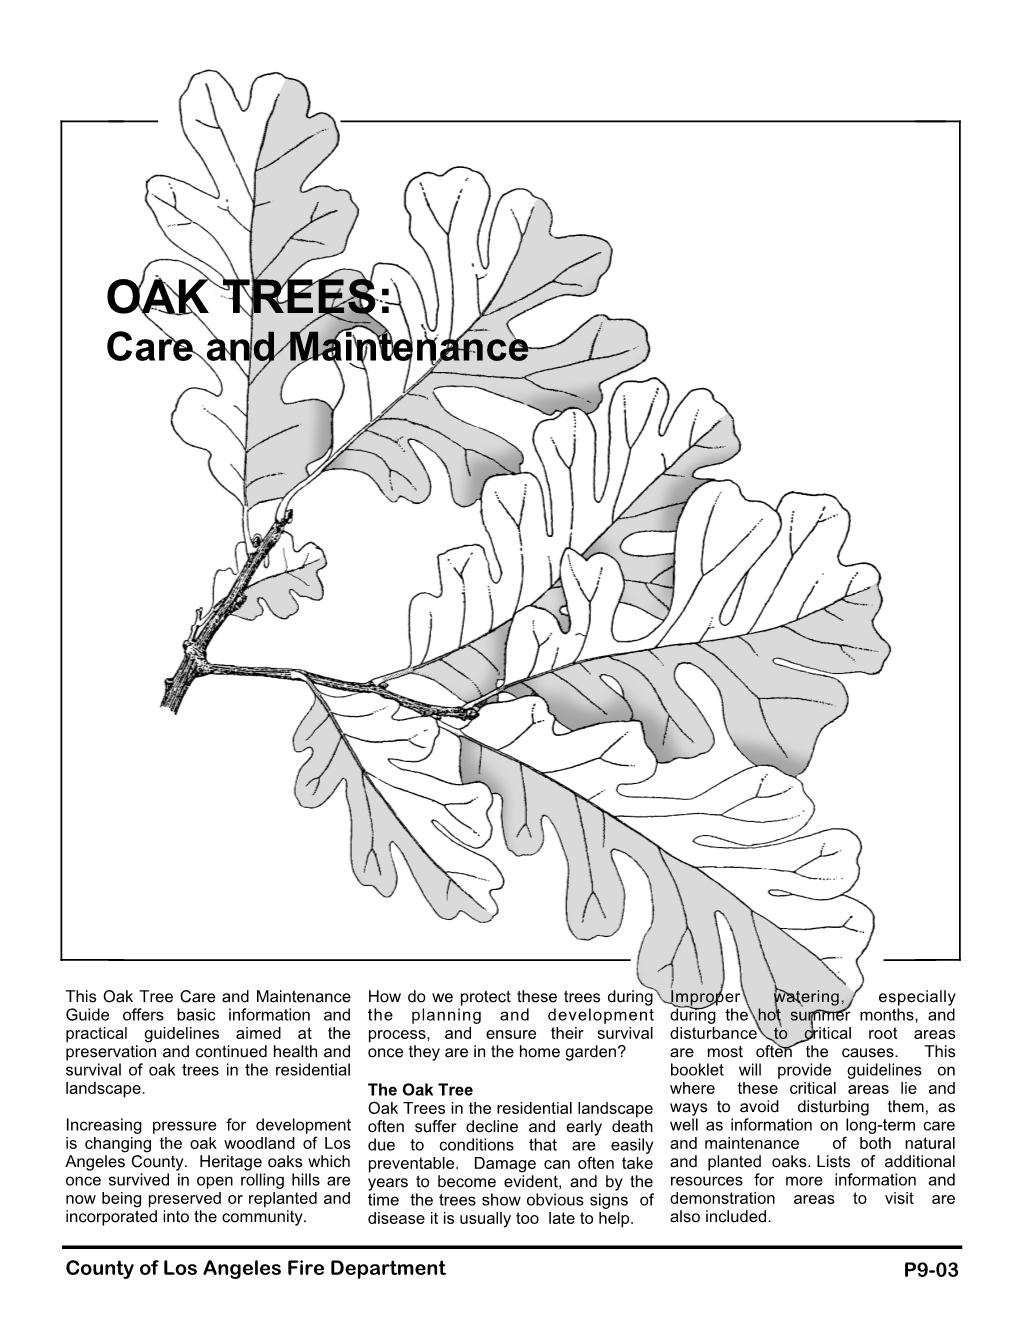 OAK TREES: Care and Maintenance